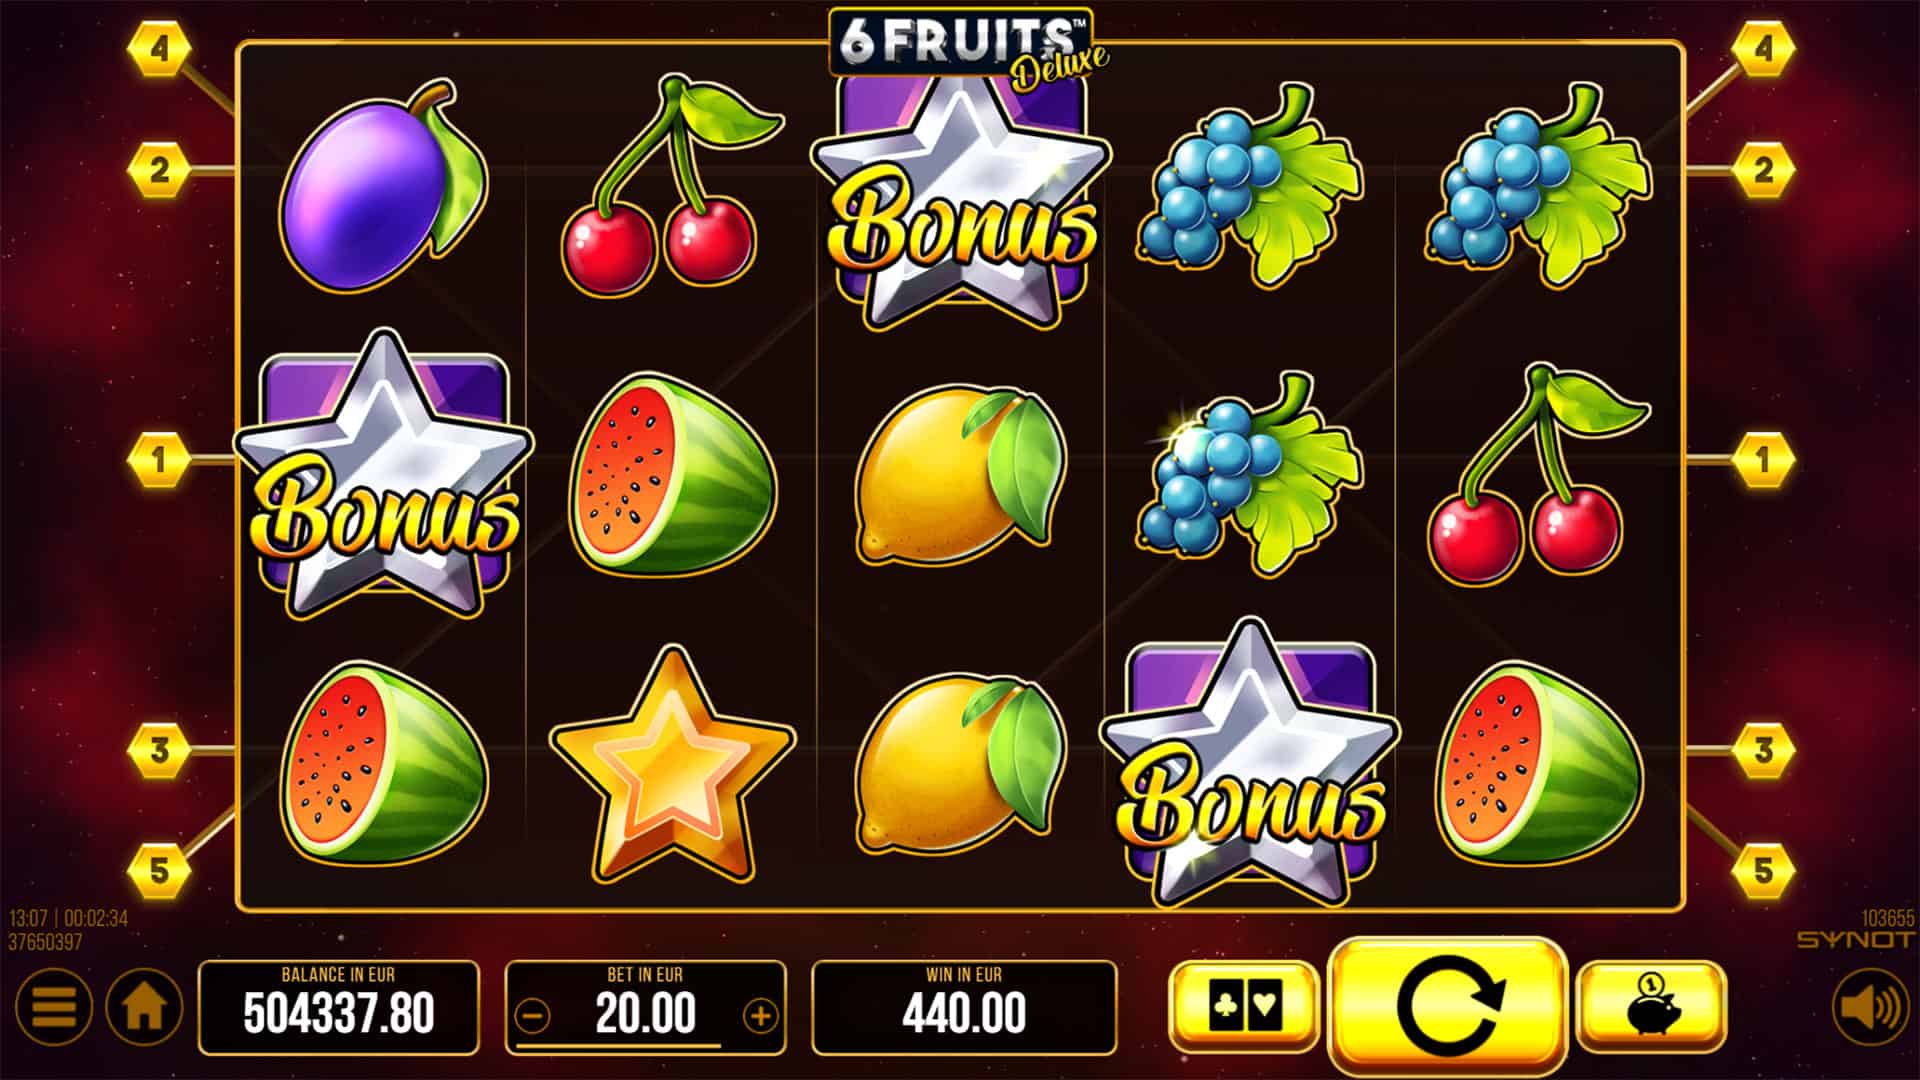 Ukážka automatu 6 Fruits Deluxe od SYNOT Games